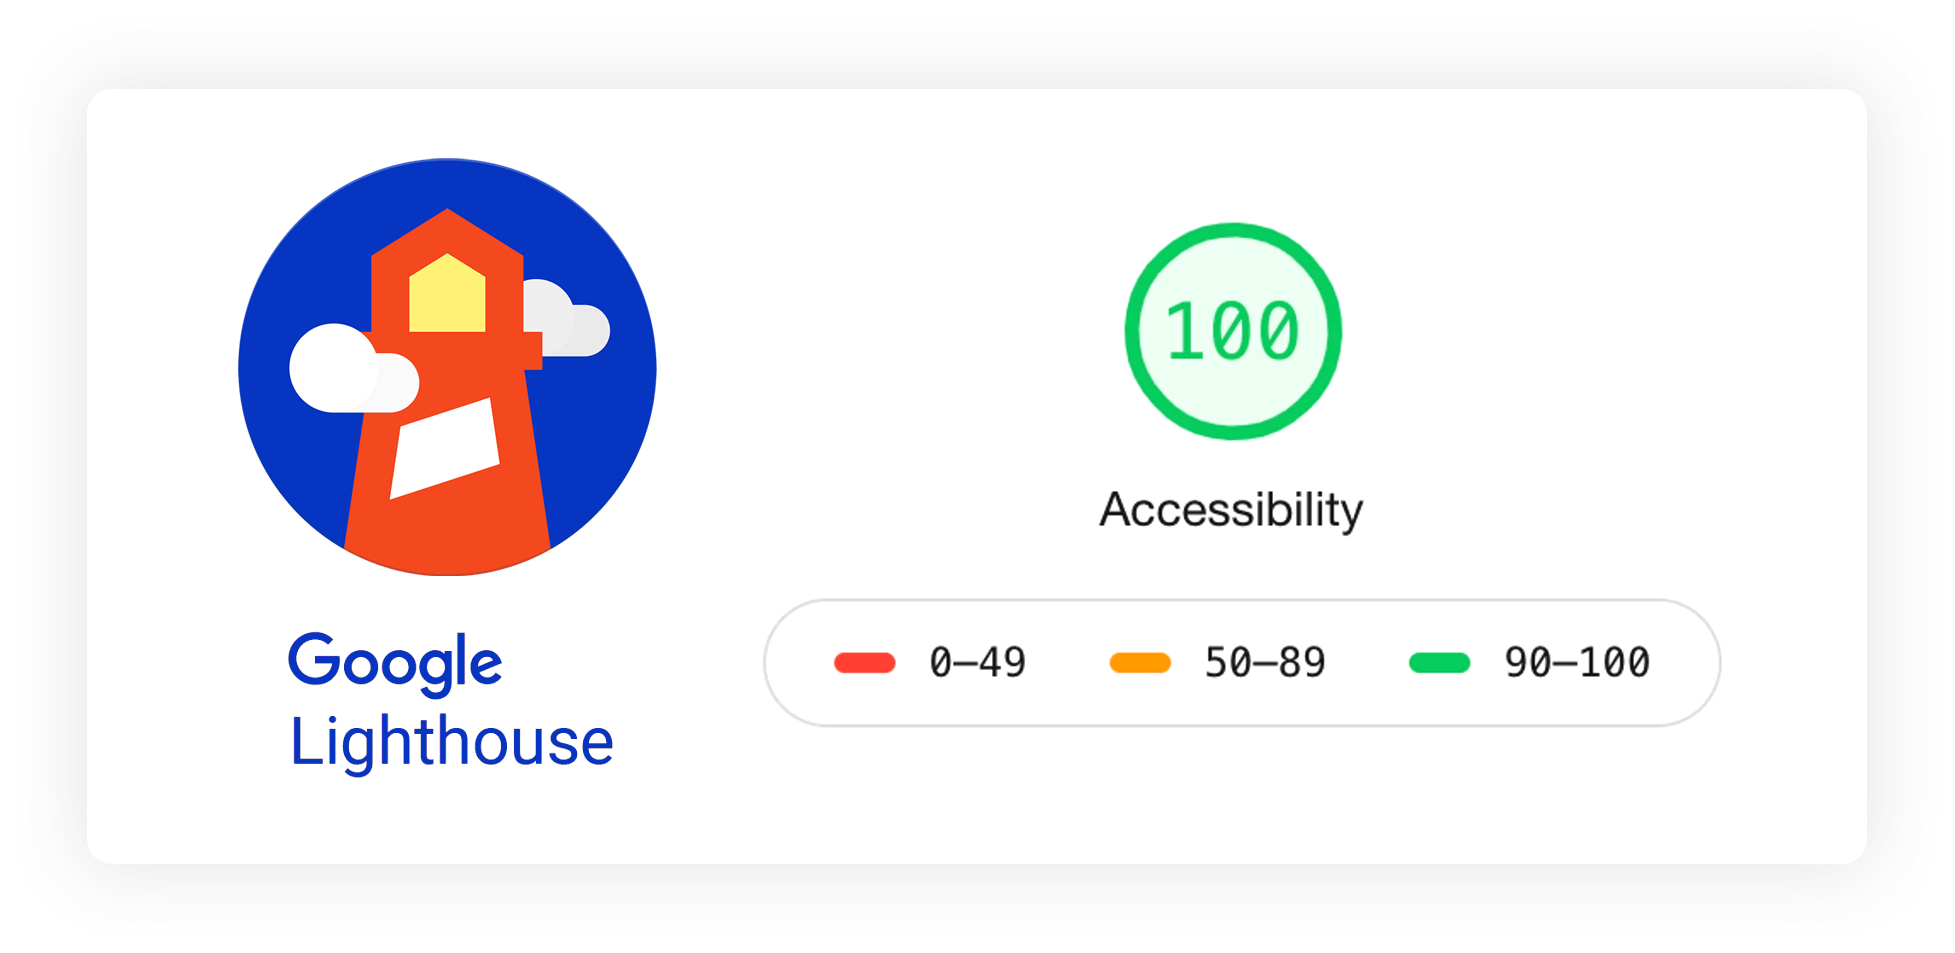 Google Lighthouse accessibility ranking